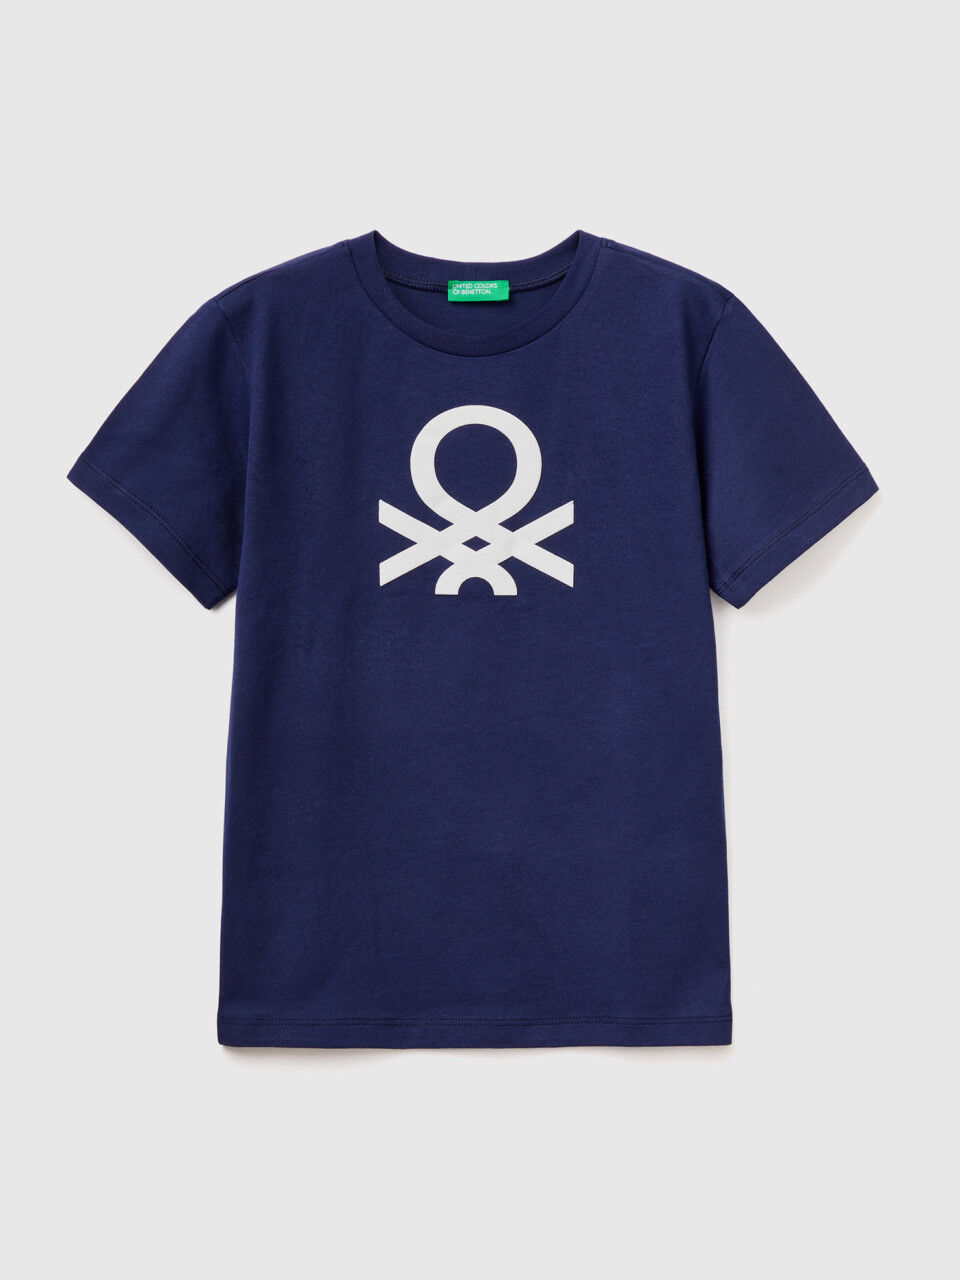 100% organic cotton t-shirt with logo